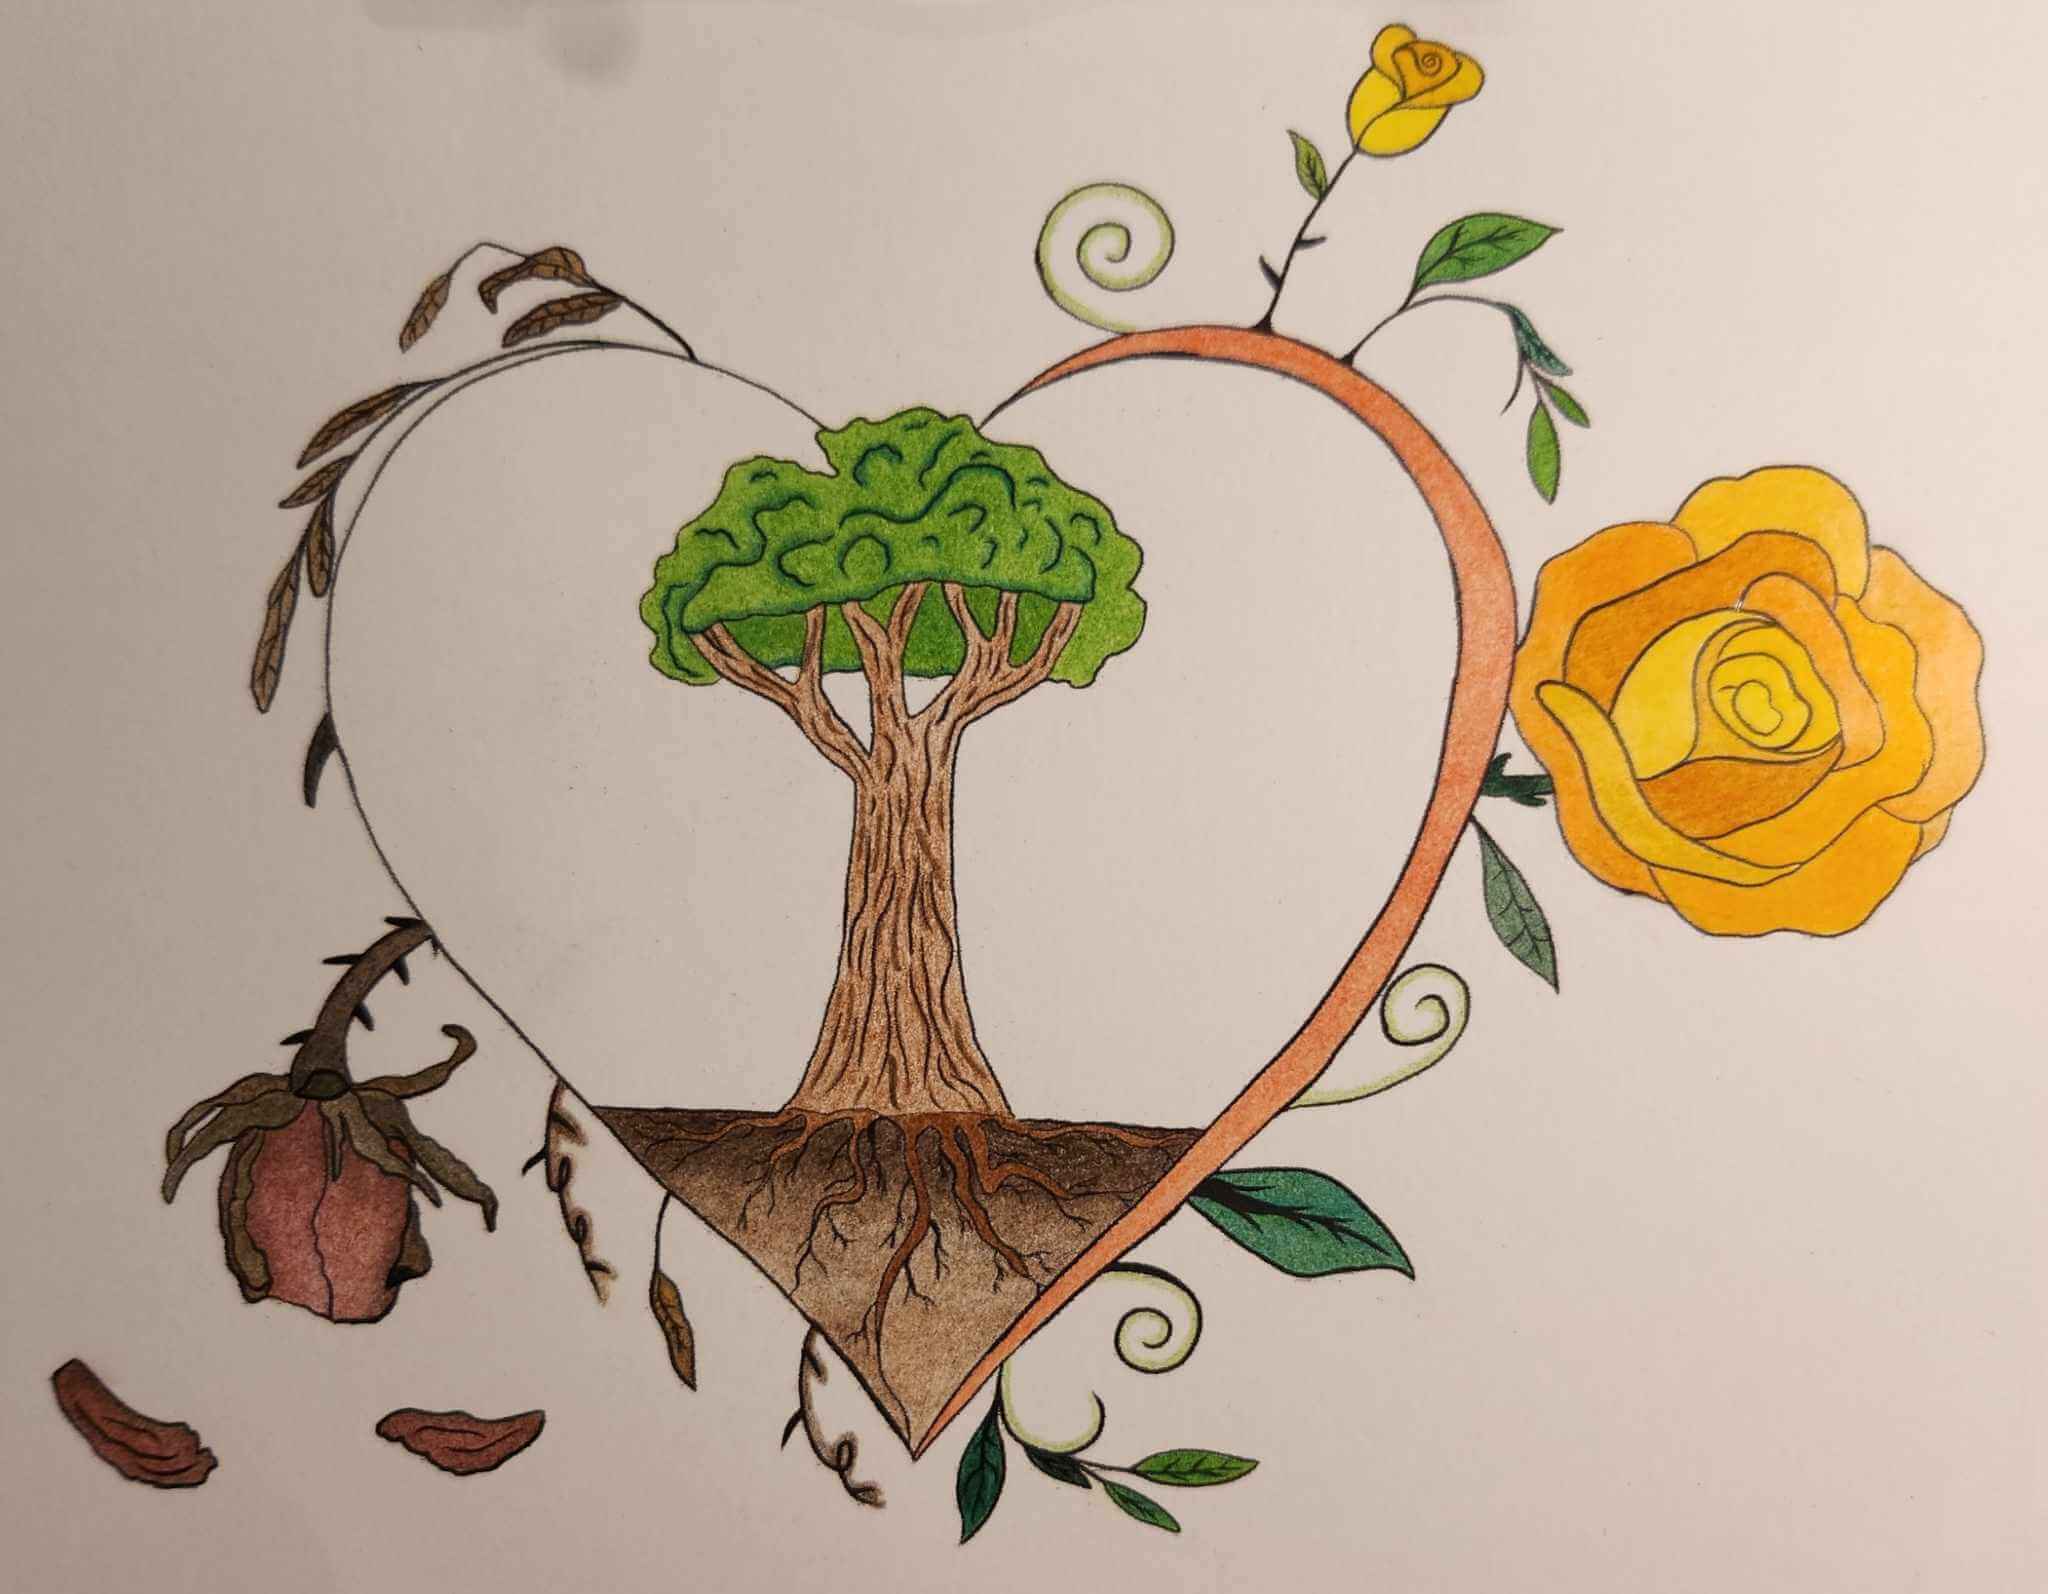 A heart drawn around a tree